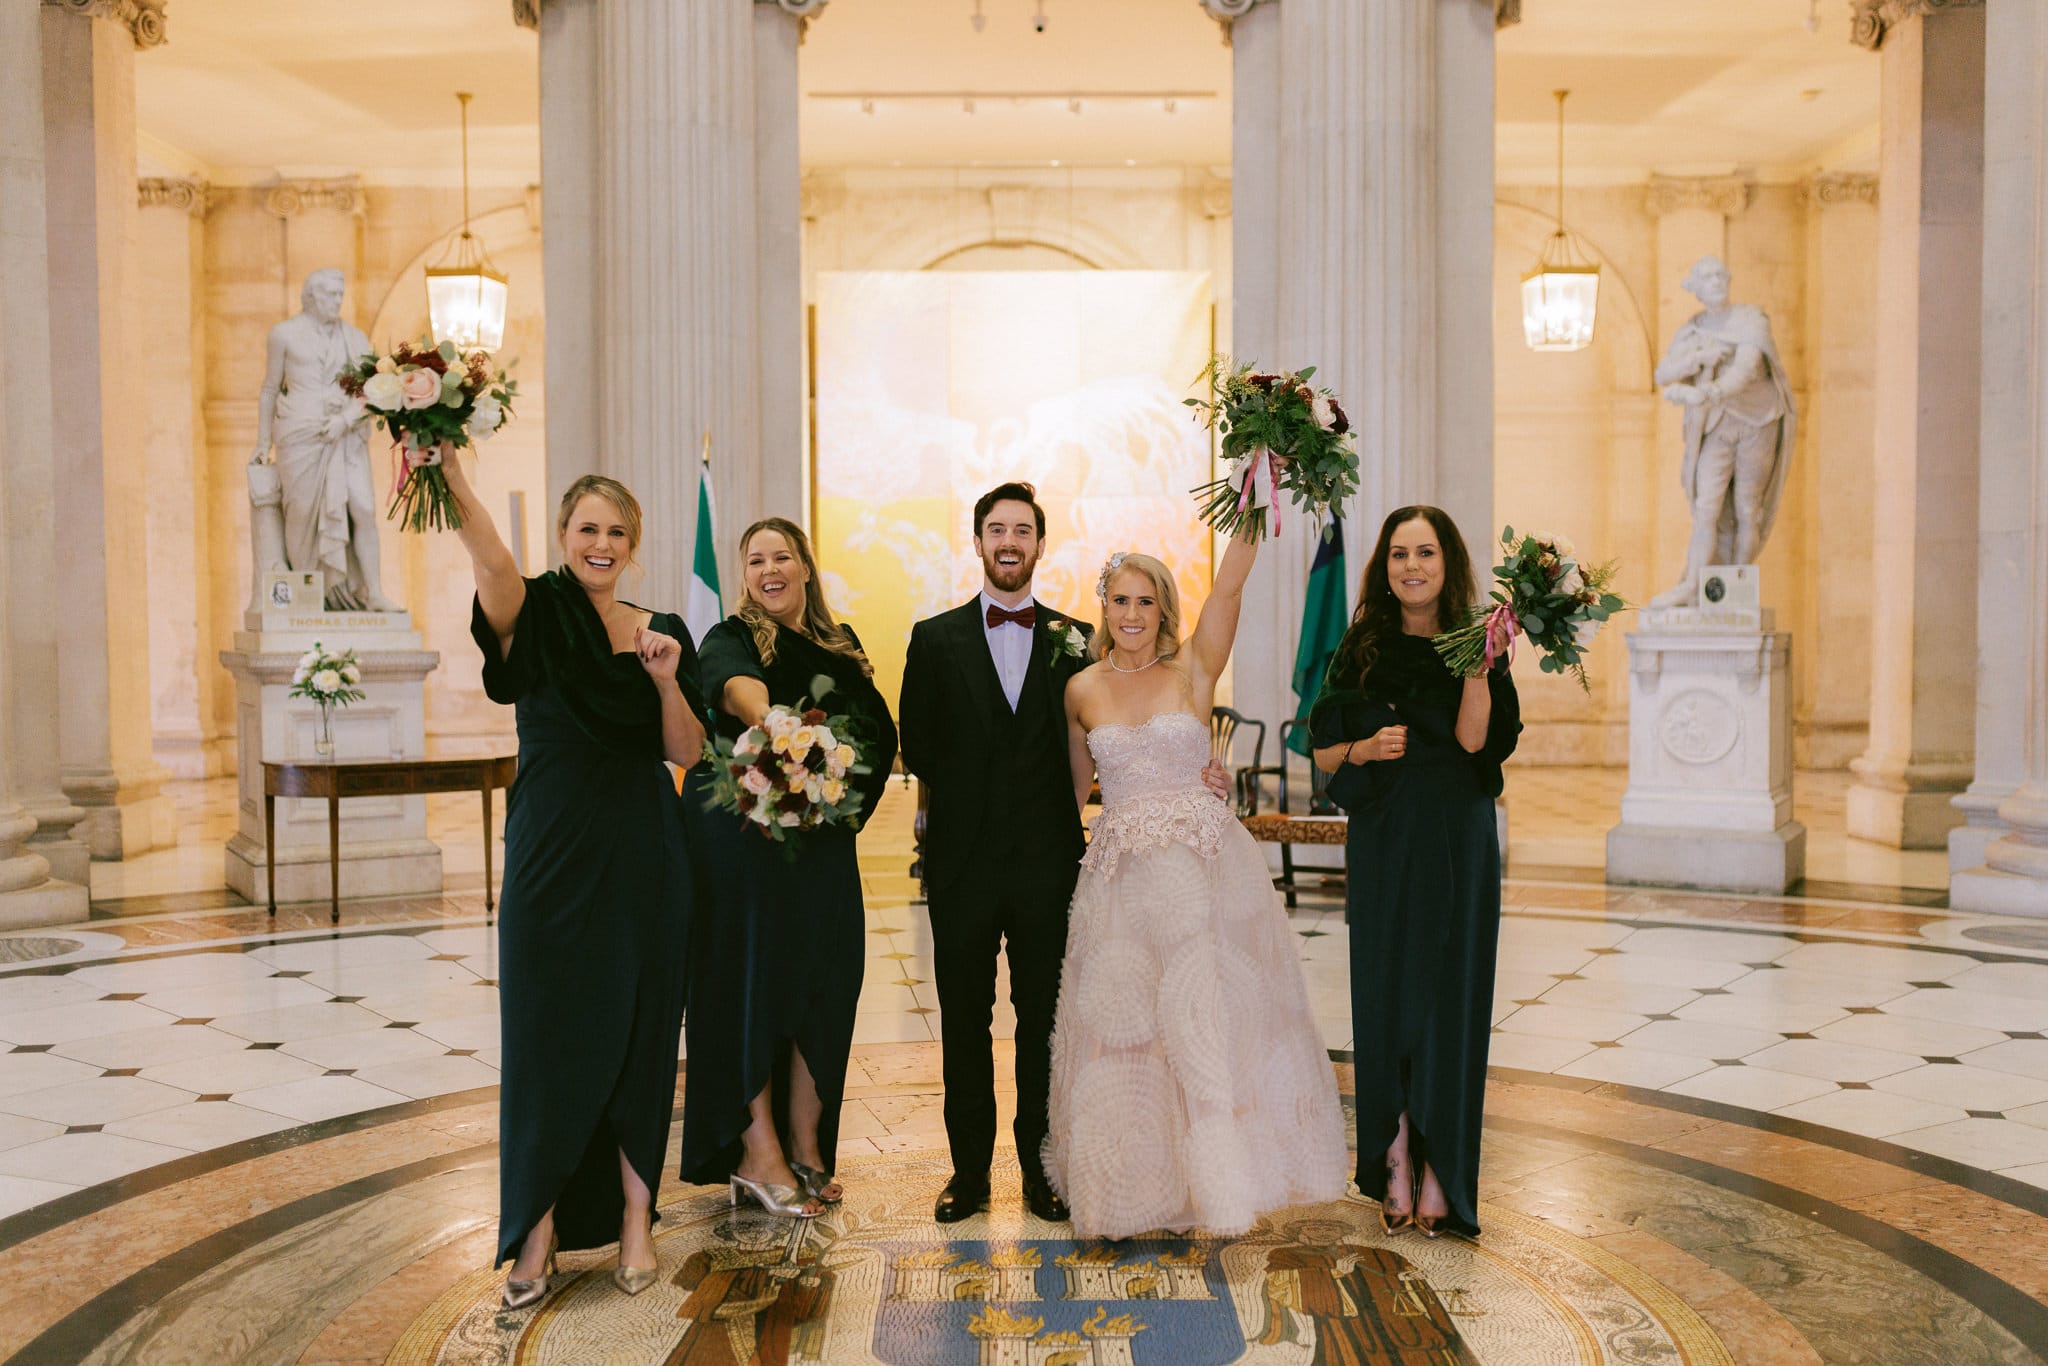 Dublin City Hall Wedding Ceremony Family Photos39